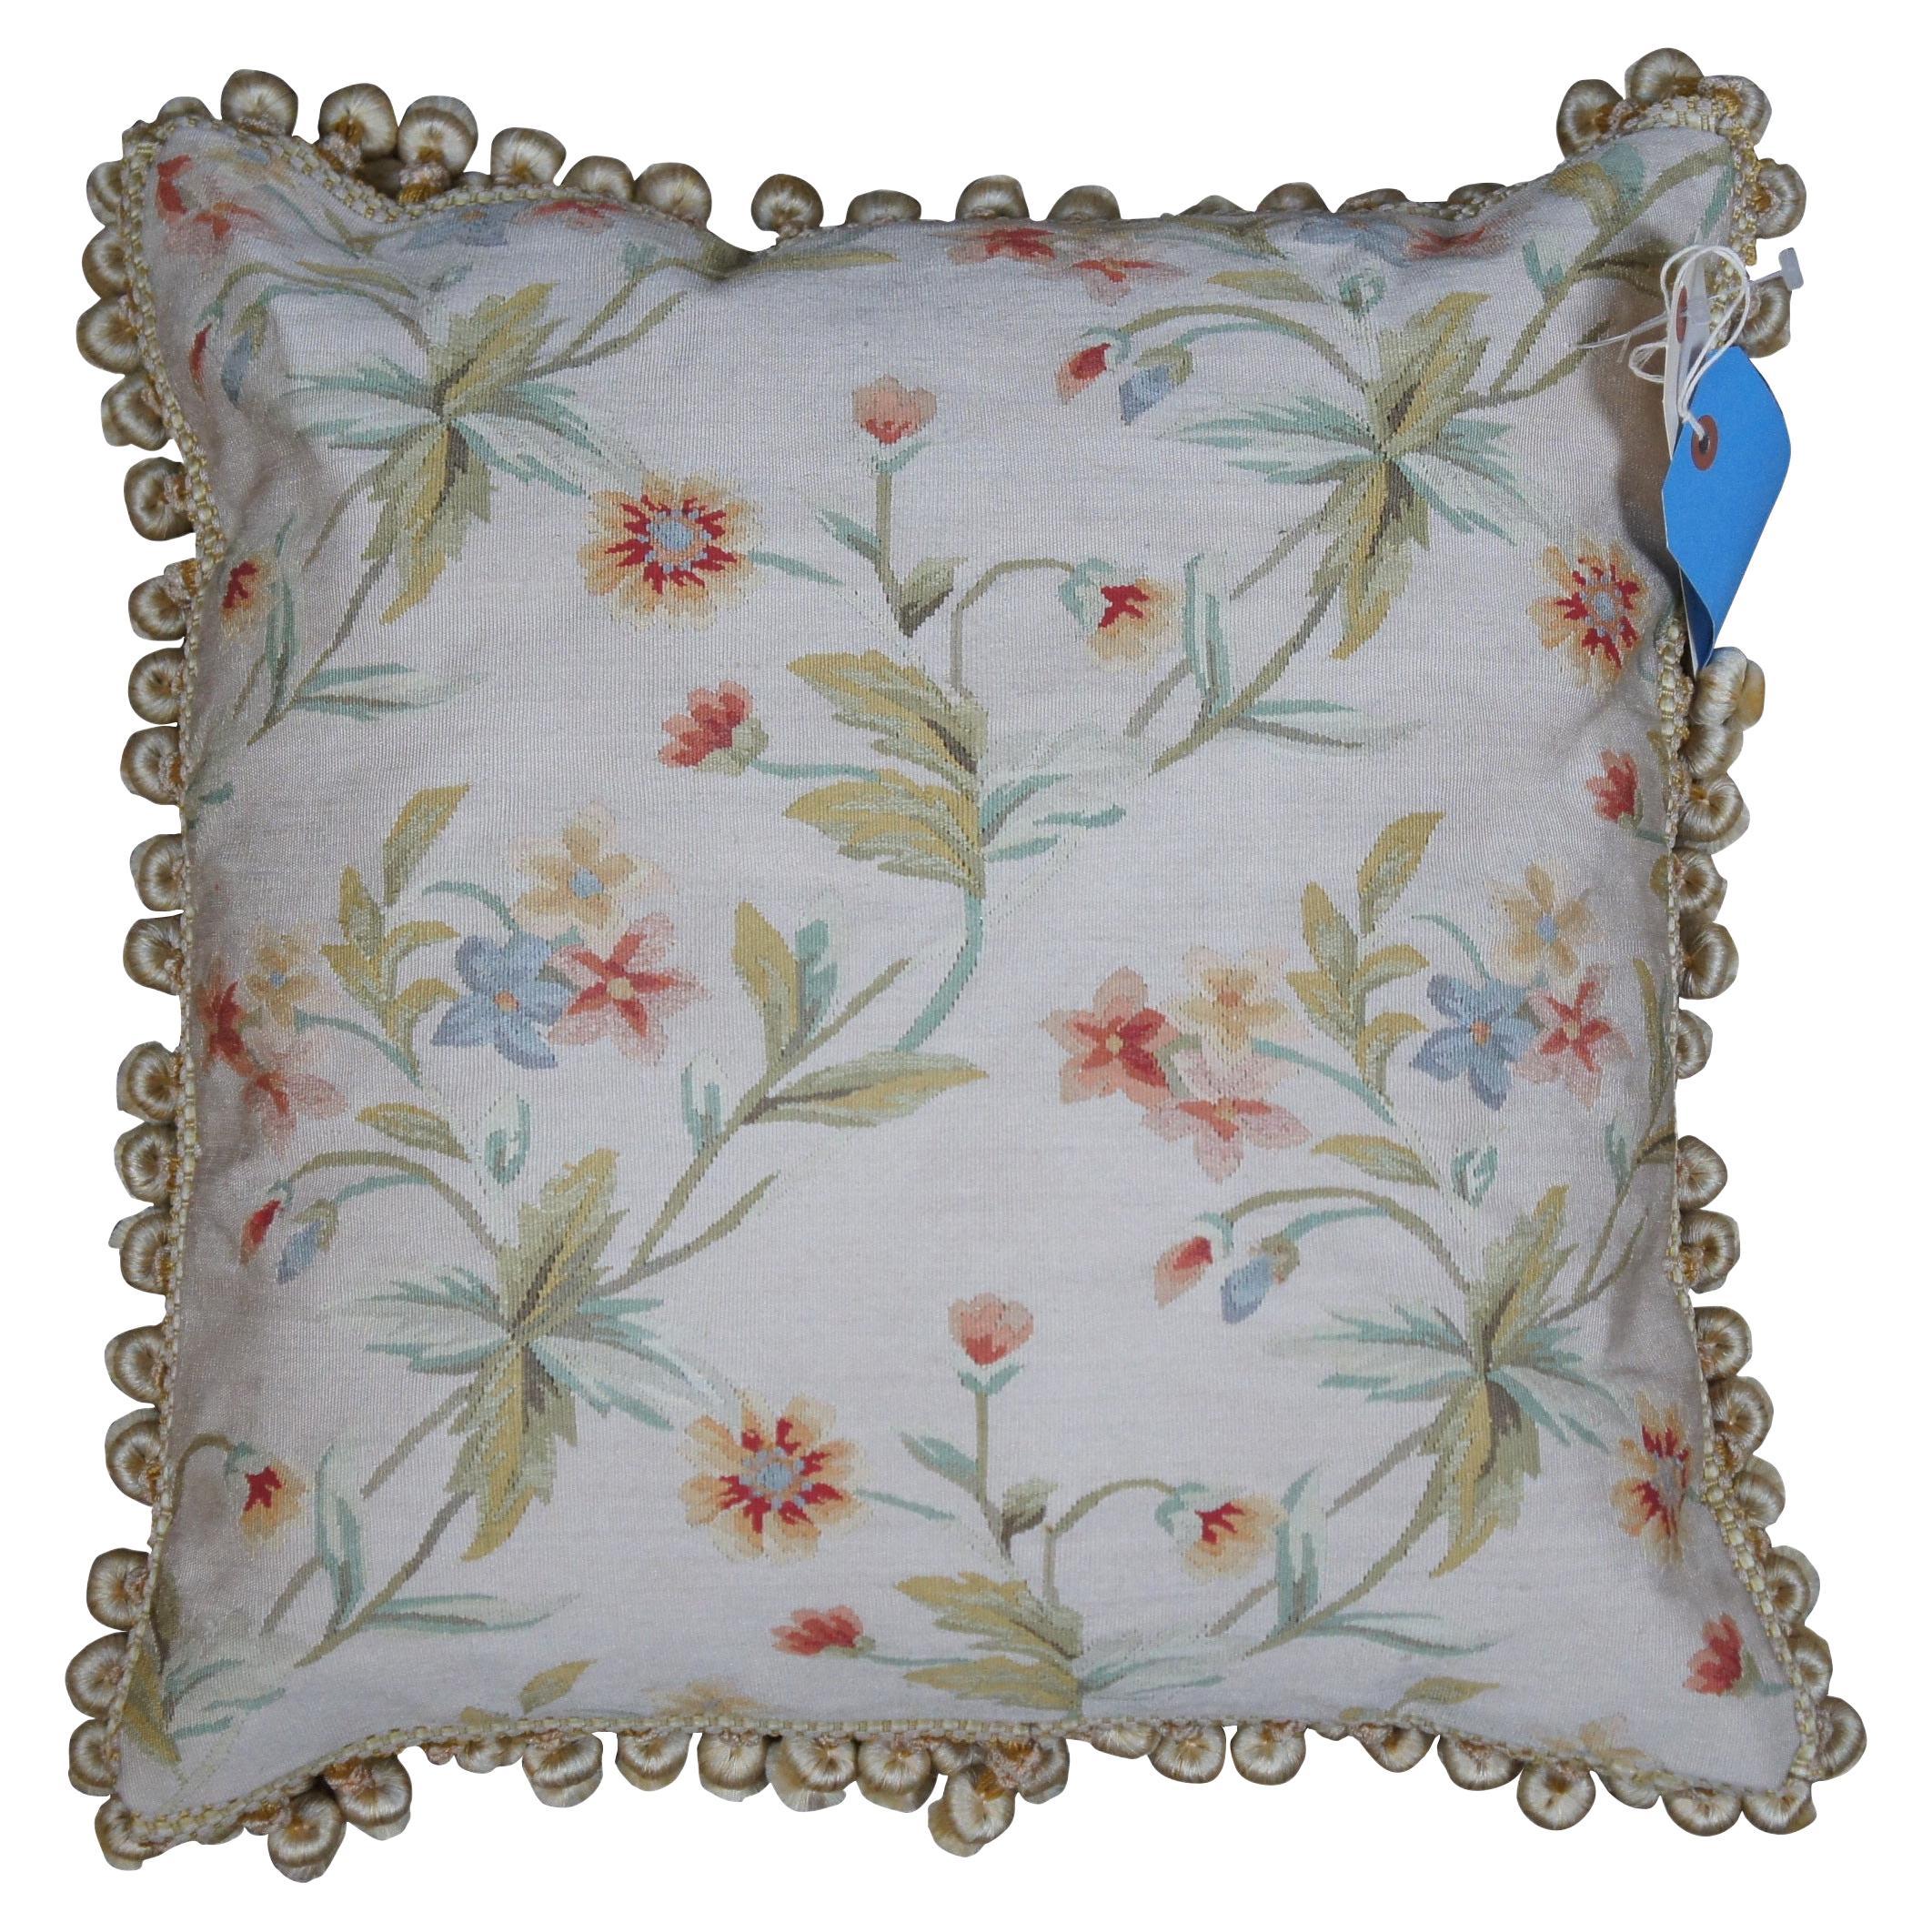 Silk Down Filled Floral Embroidered Tassel Lumbar Throw Pillow 18"